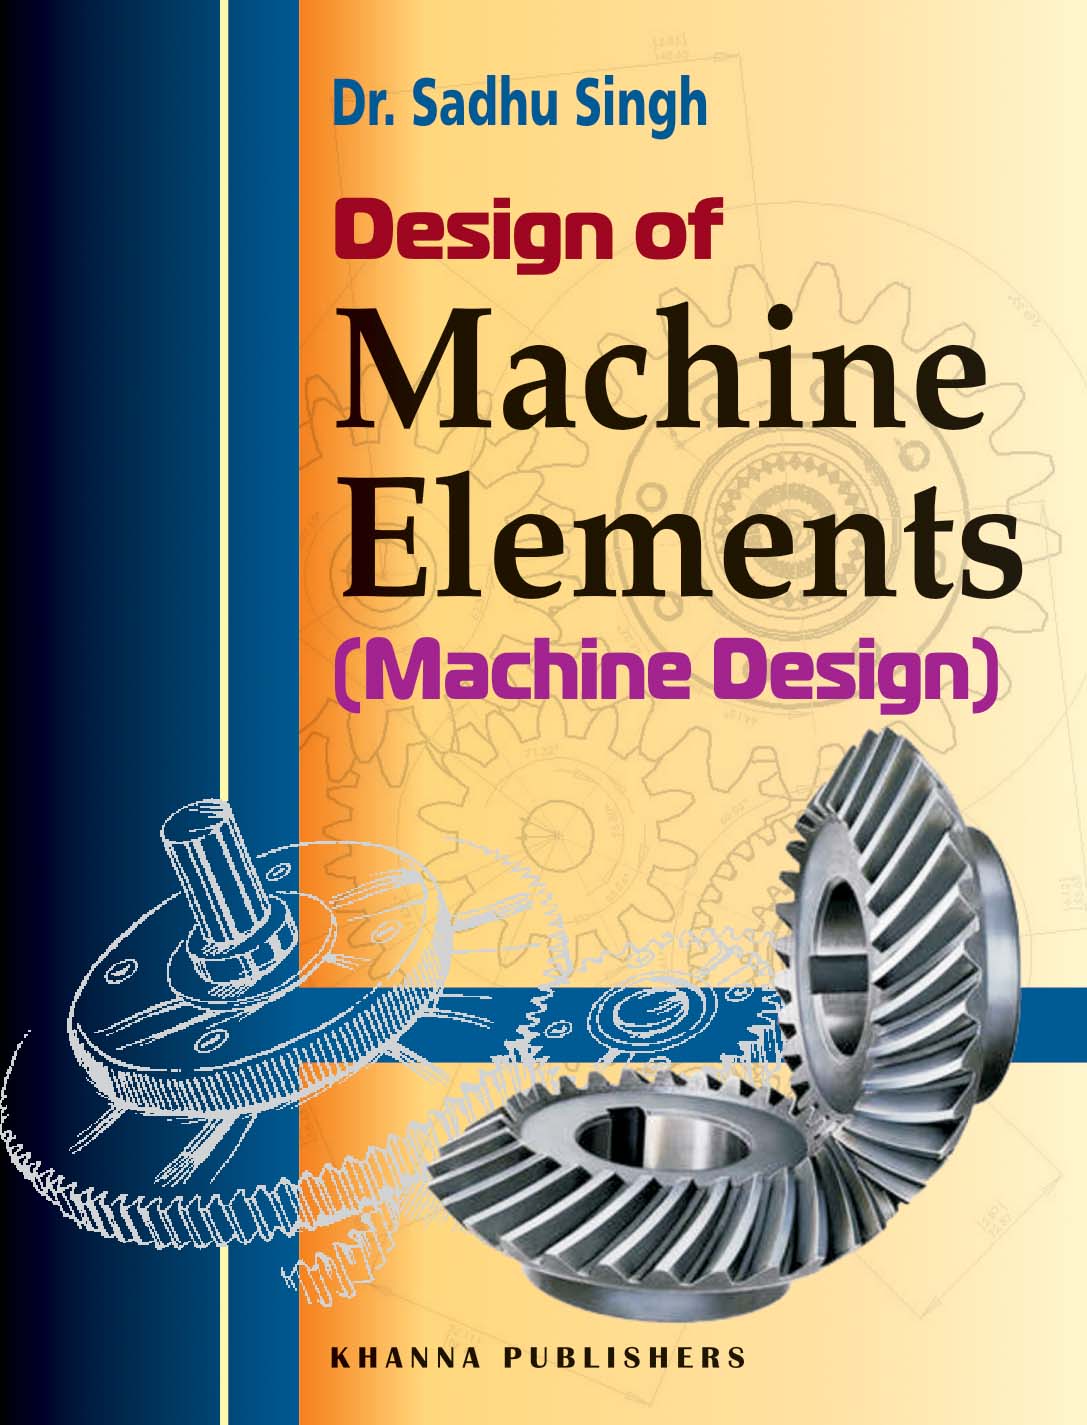 psg design data book pdf free download mechanical